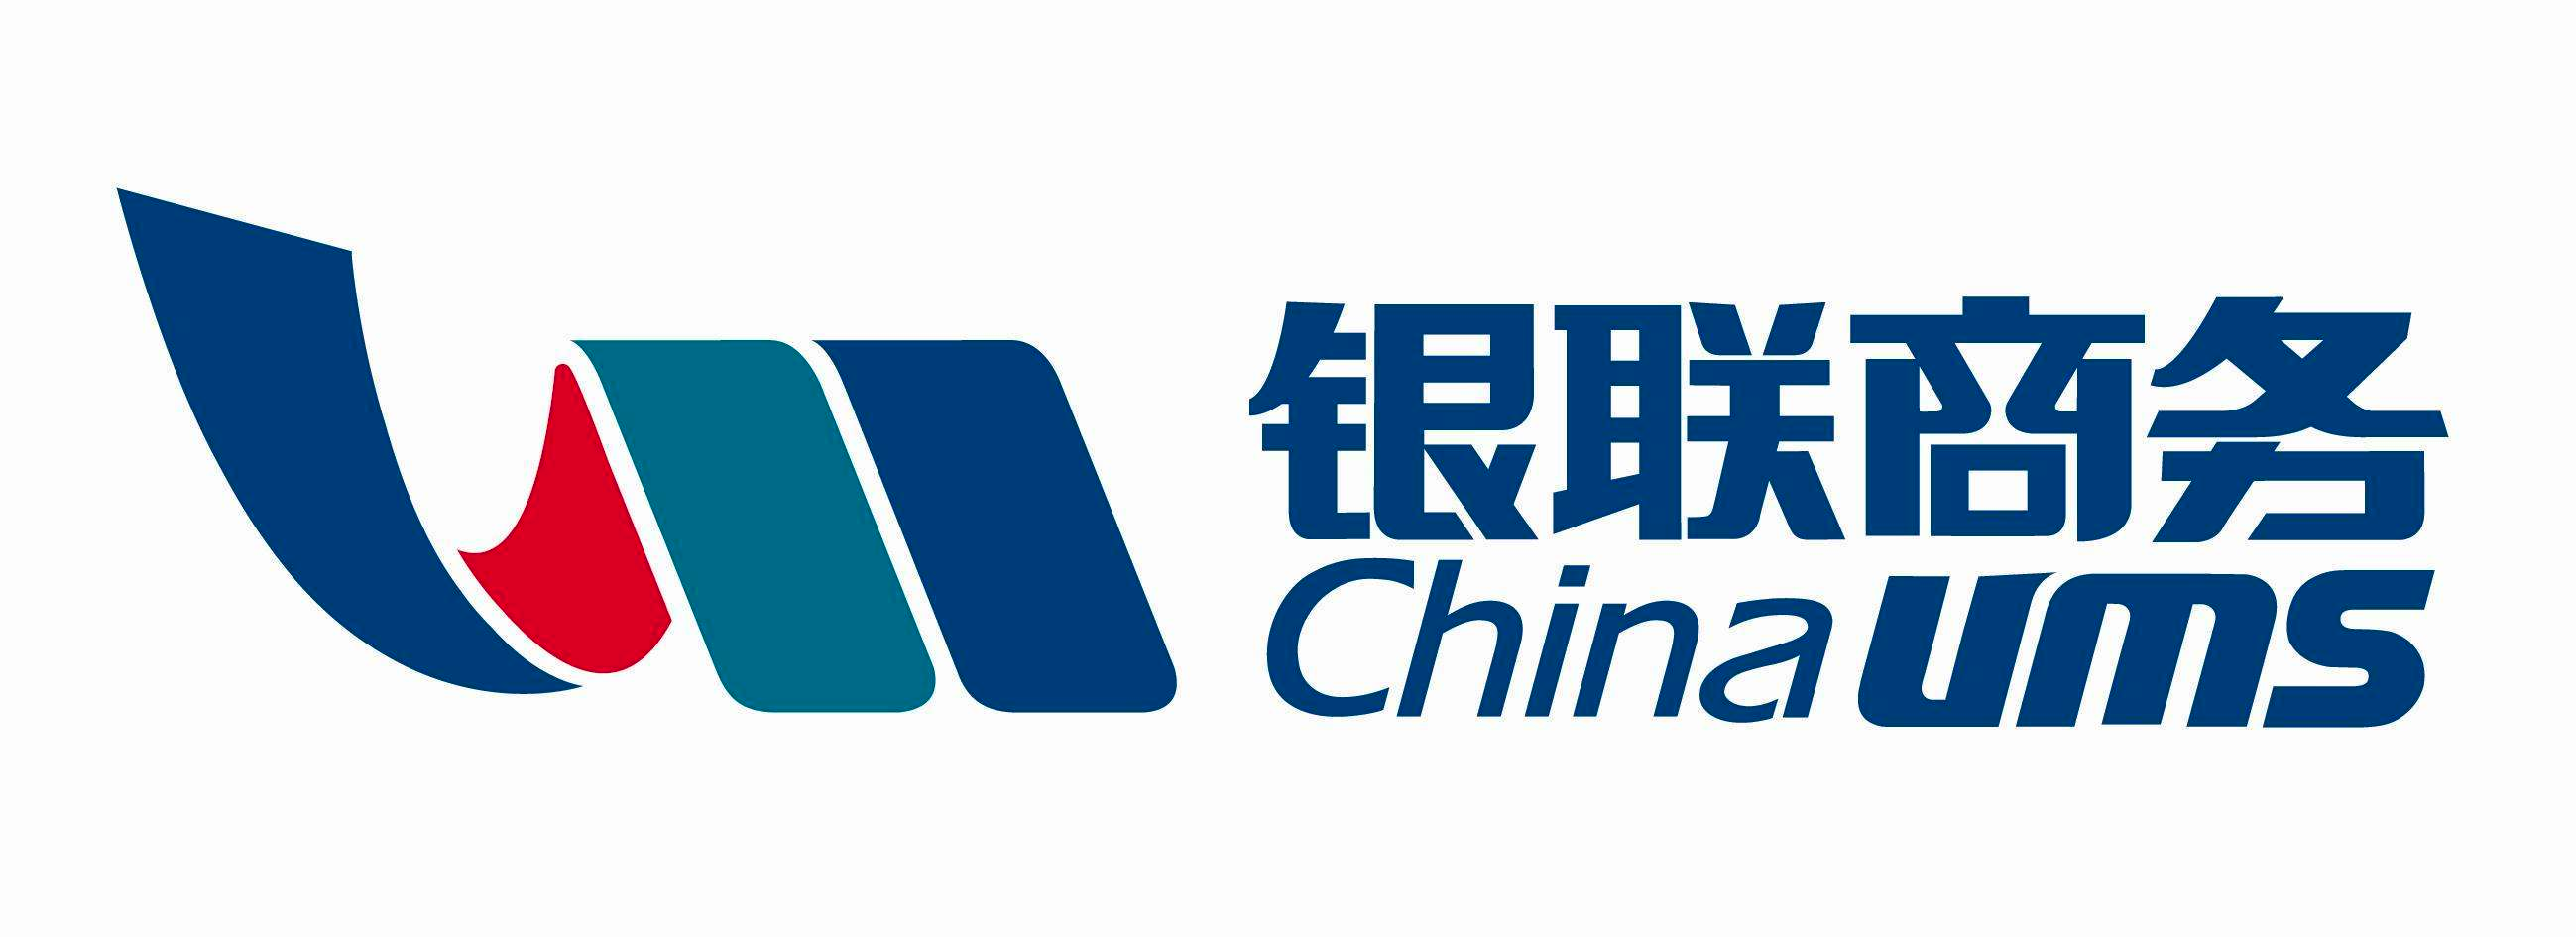 银联商务 testimonial logo